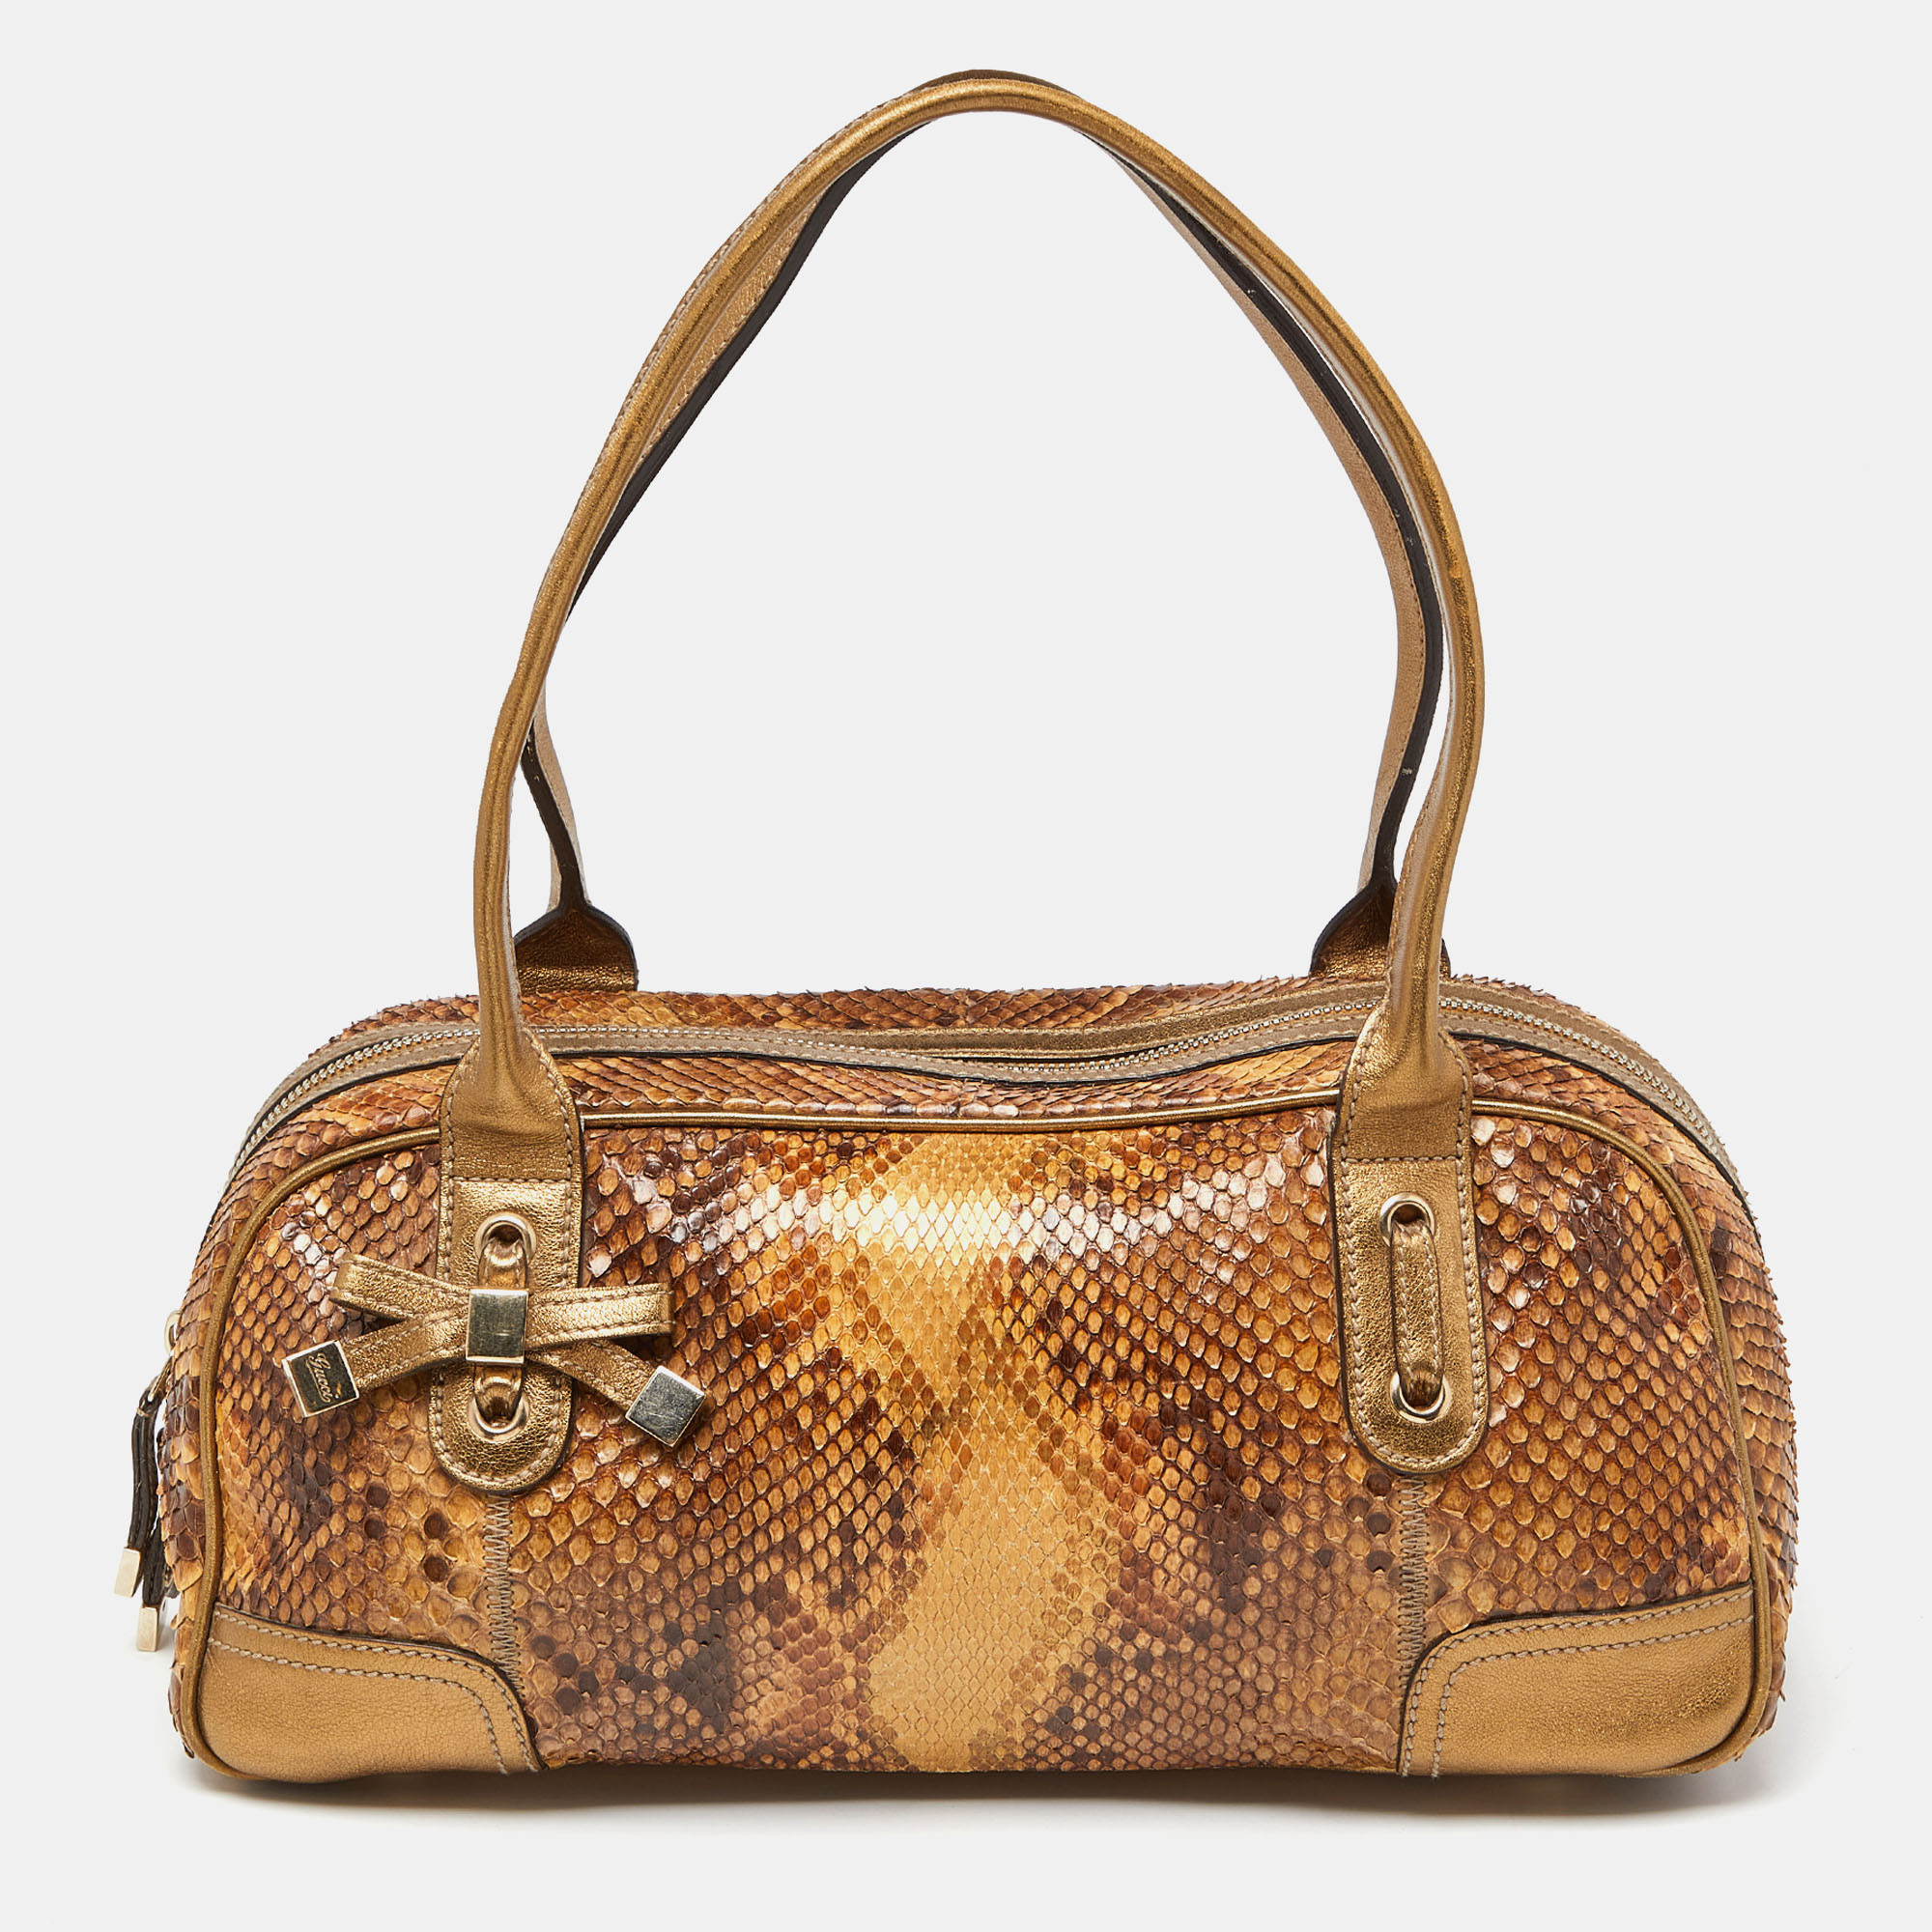 Gucci gold/brown python and leather princy boston bag